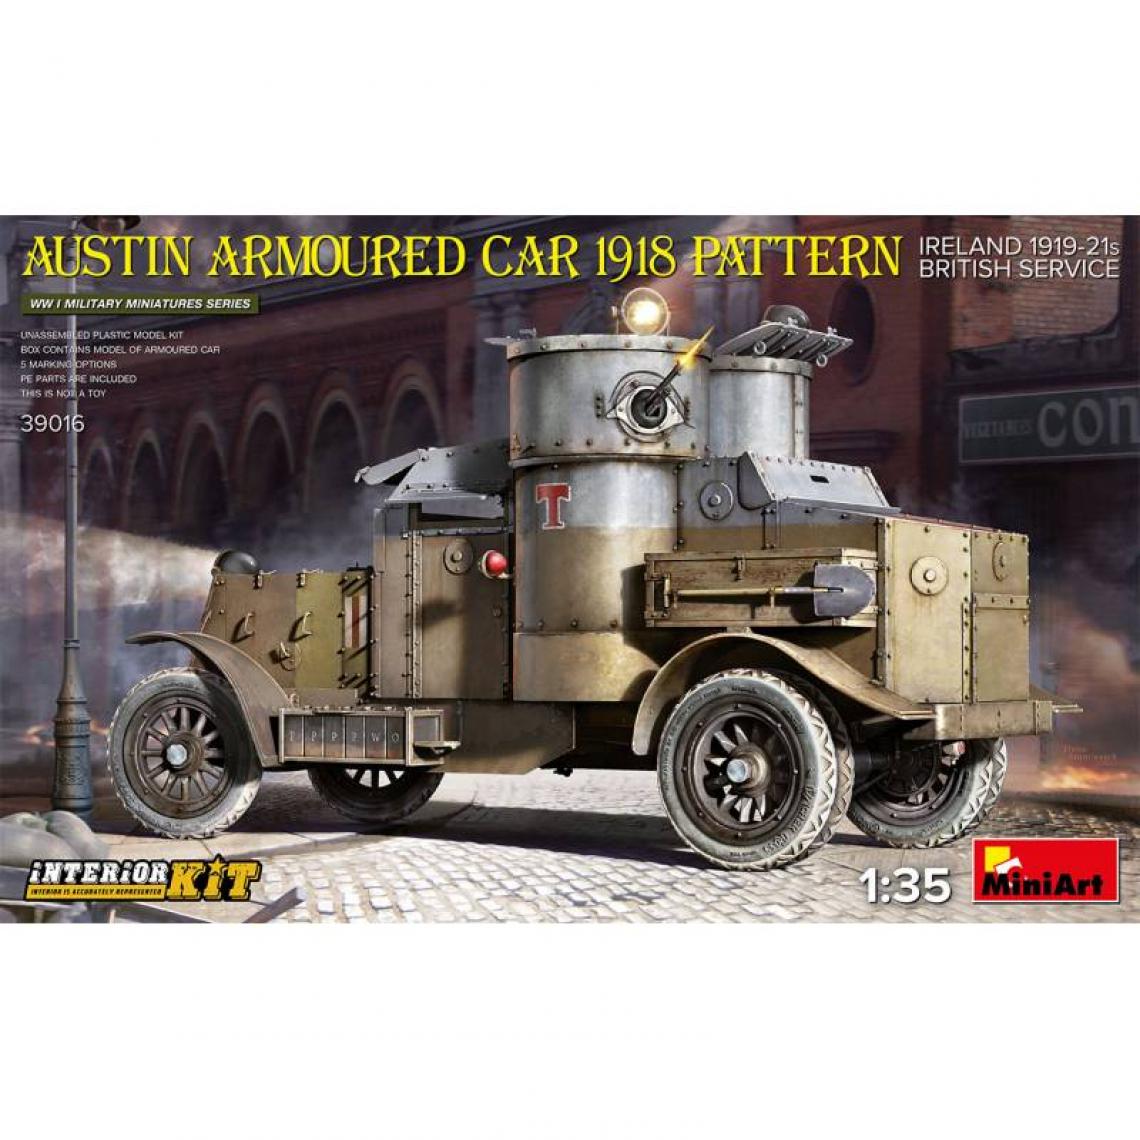 Mini Art - Maquette Véhicule Austin Armoured Car 1918 Pattern. Ireland 1919-21. British Service. Interior Kit - Chars